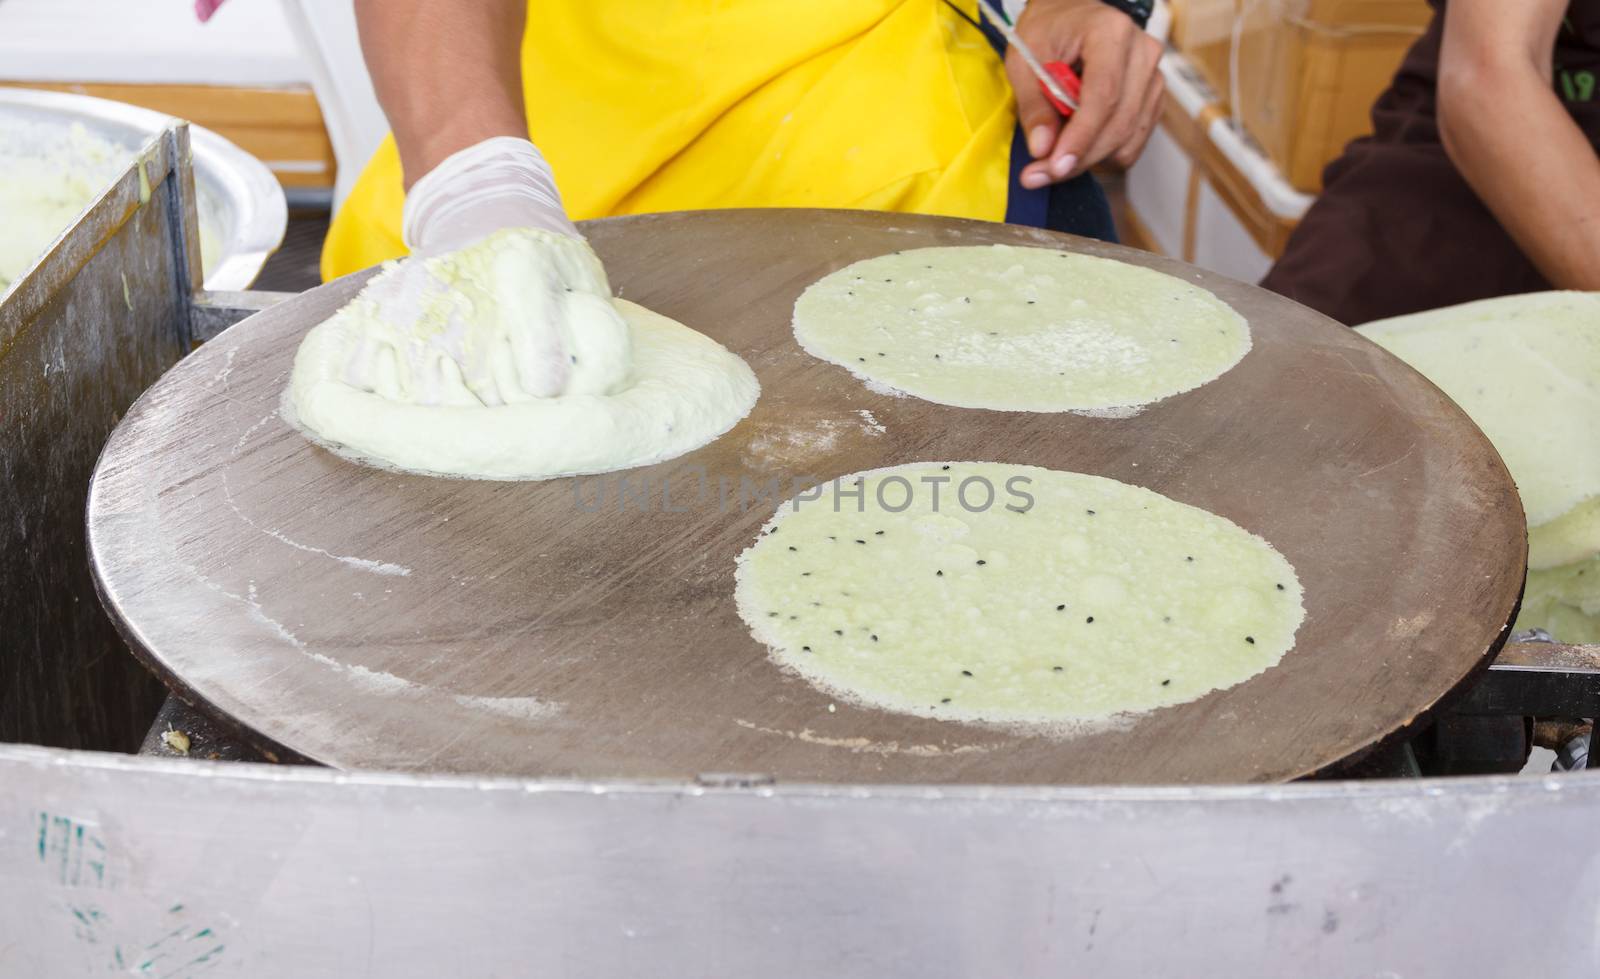 sheet flour on pan for wrap cotton candy (Thai dessert name Roti by vitawin